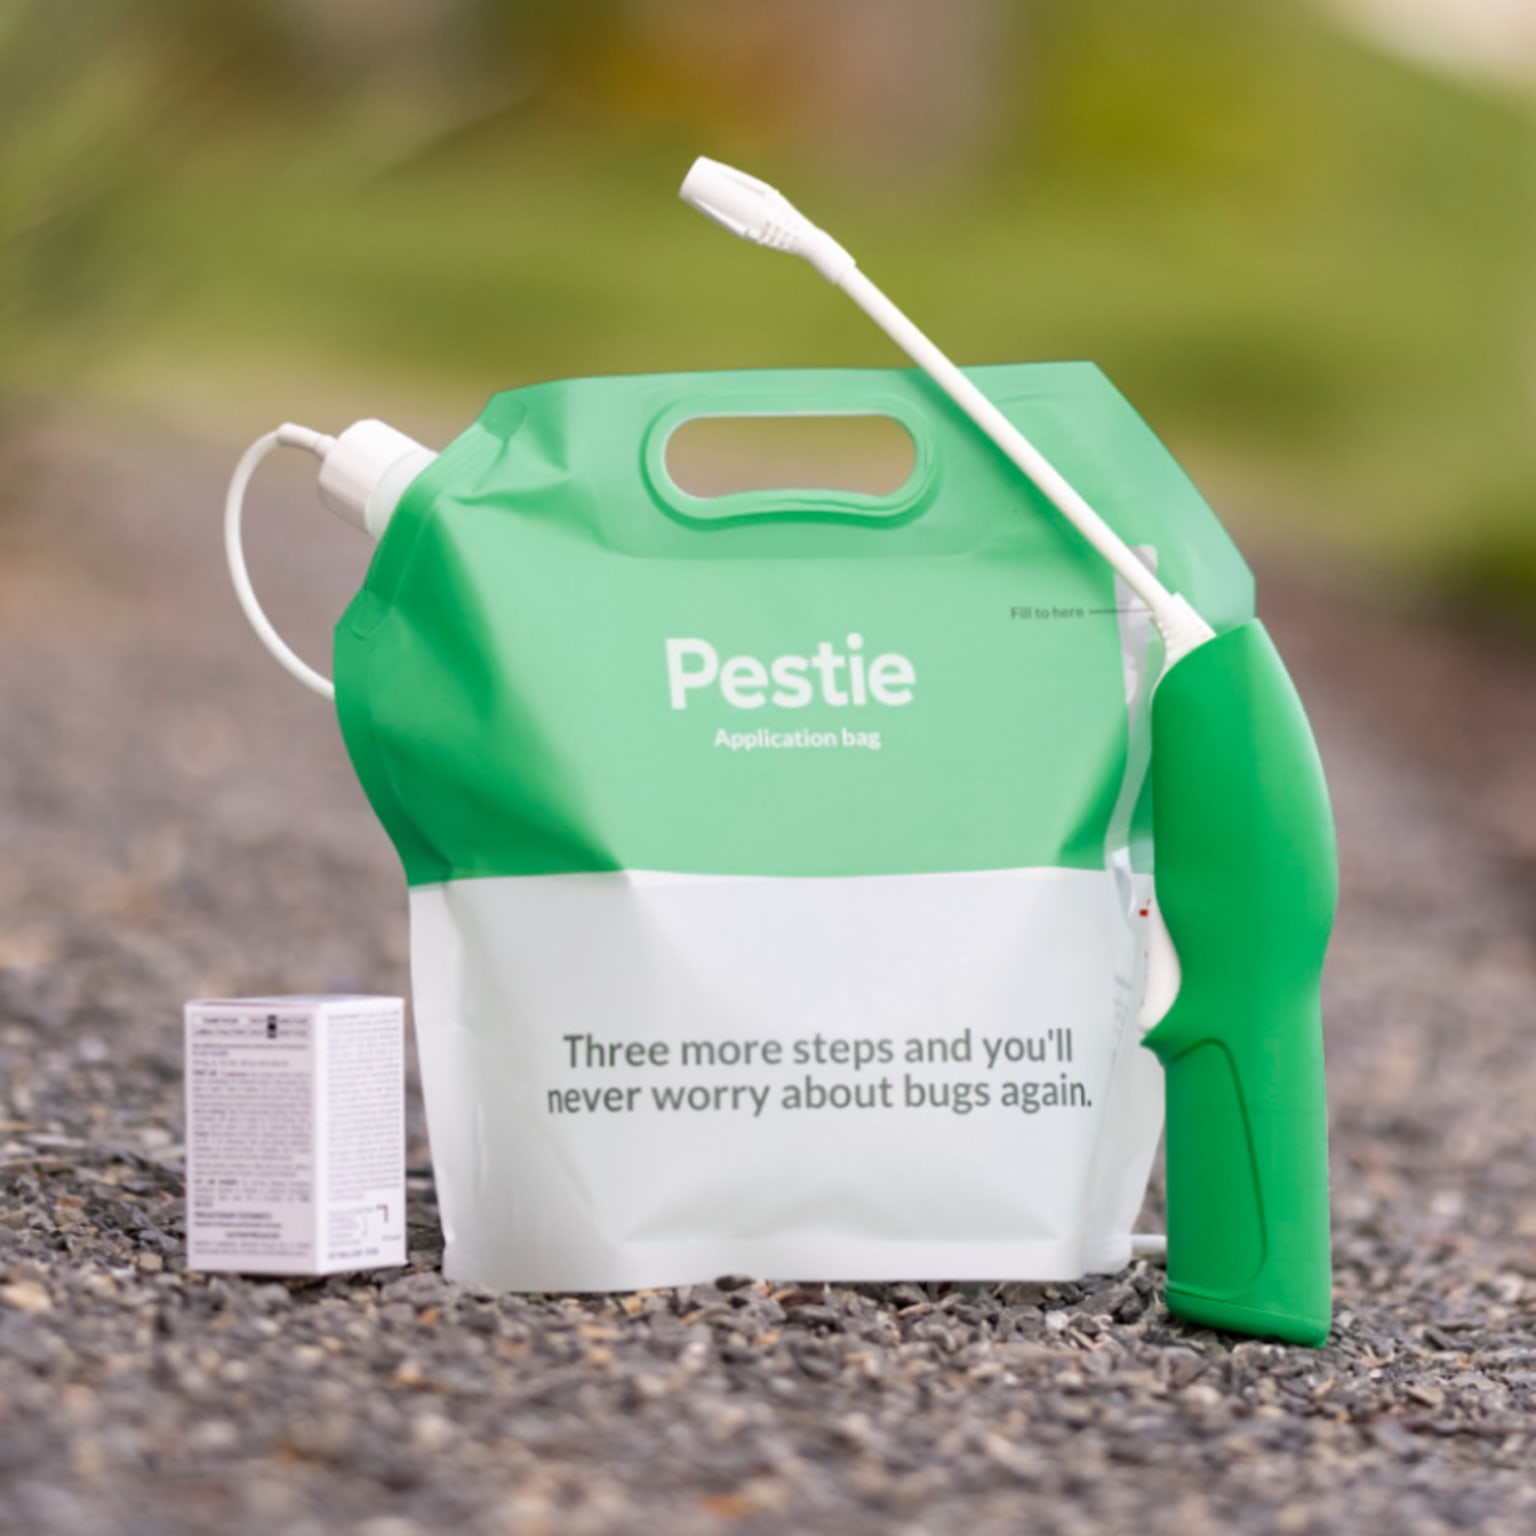 Pestie smart pest plan application bundle.